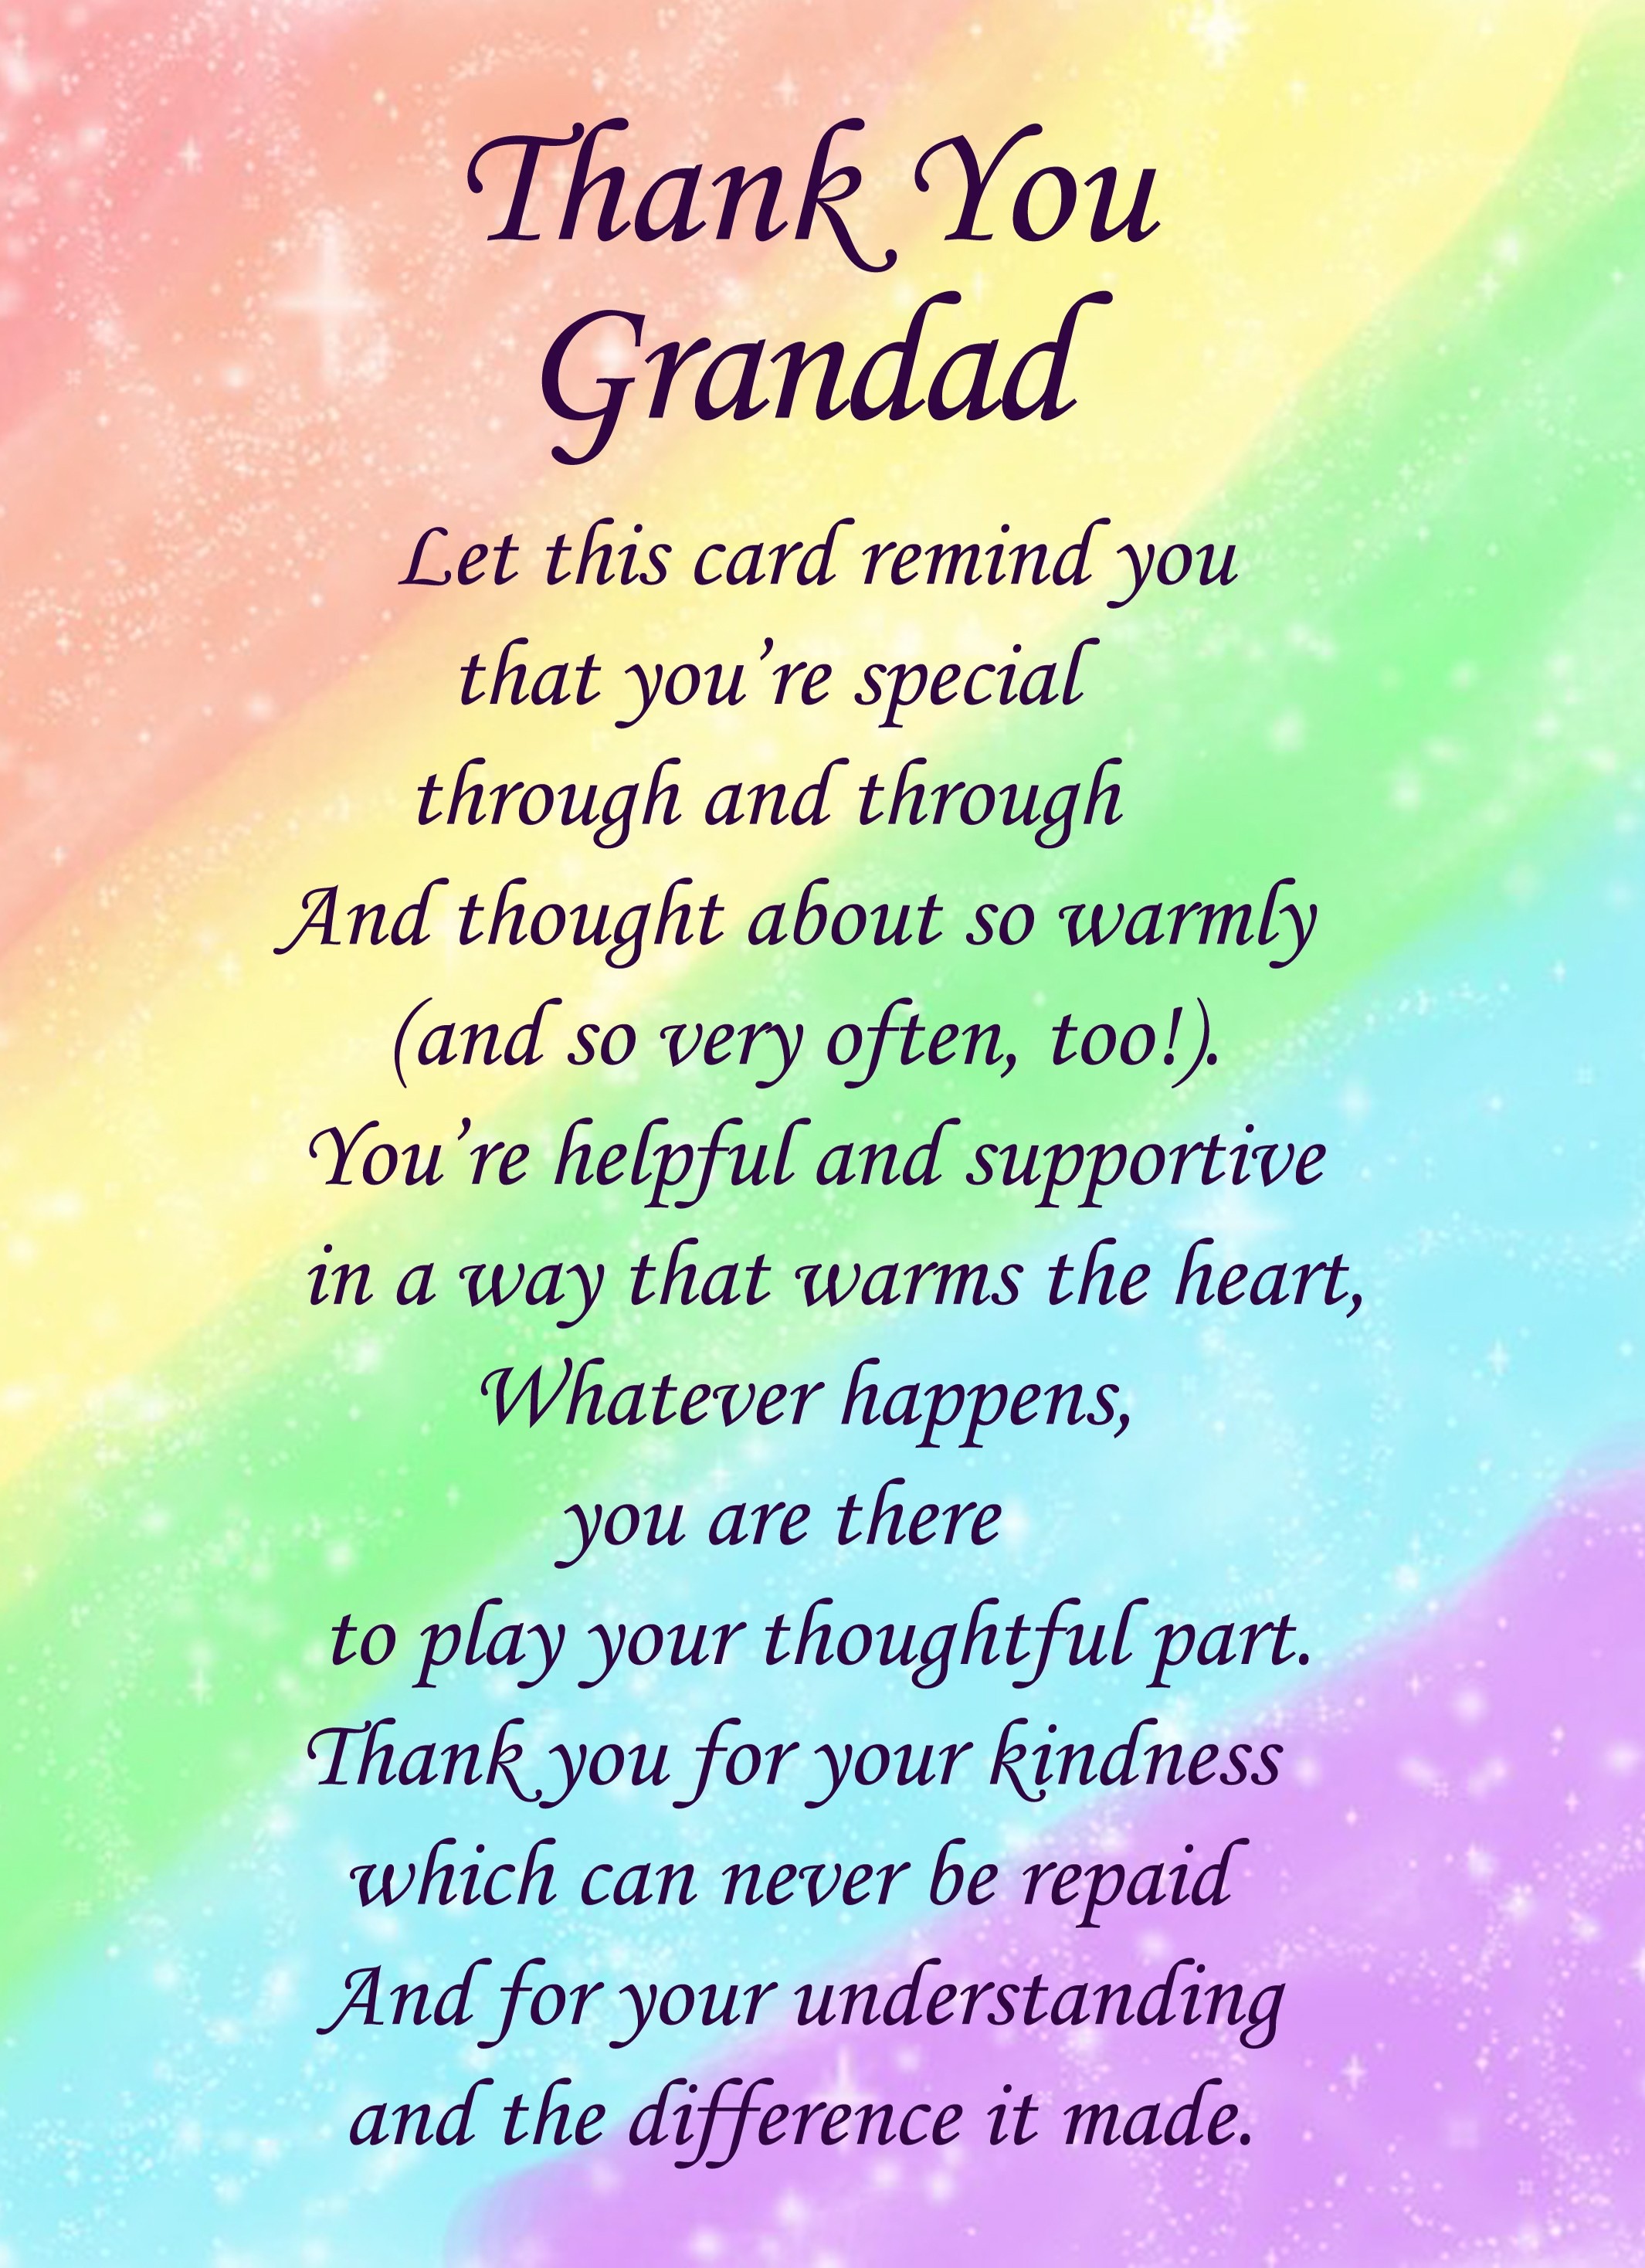 Thank You 'Grandad' Poem Verse Greeting Card